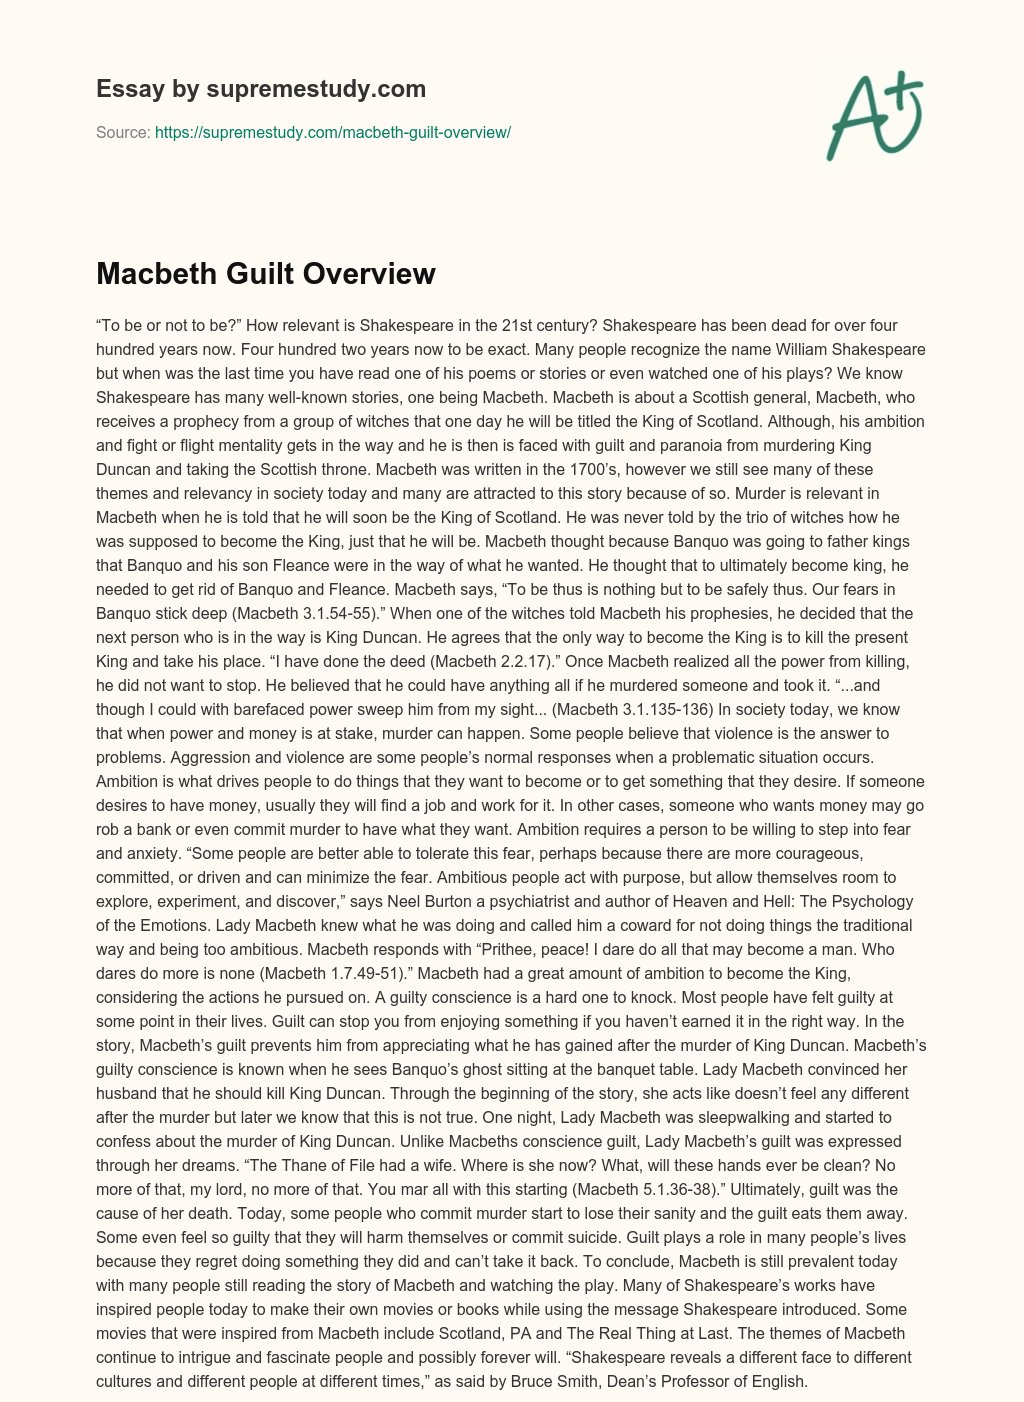 macbeth essay on guilt